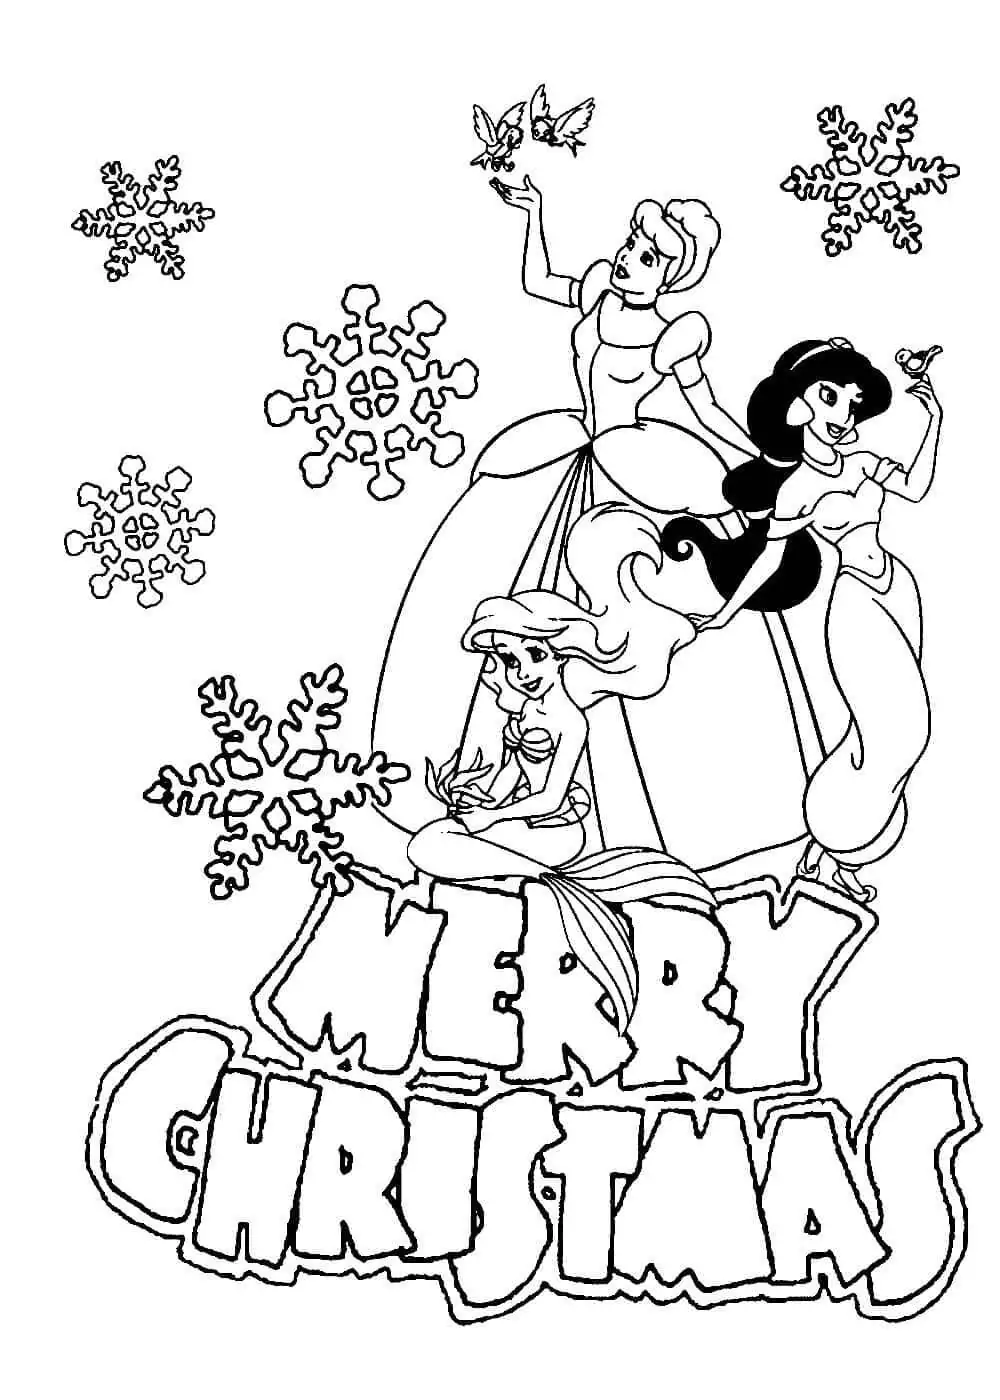 Merry Christmas with Disney Princesses